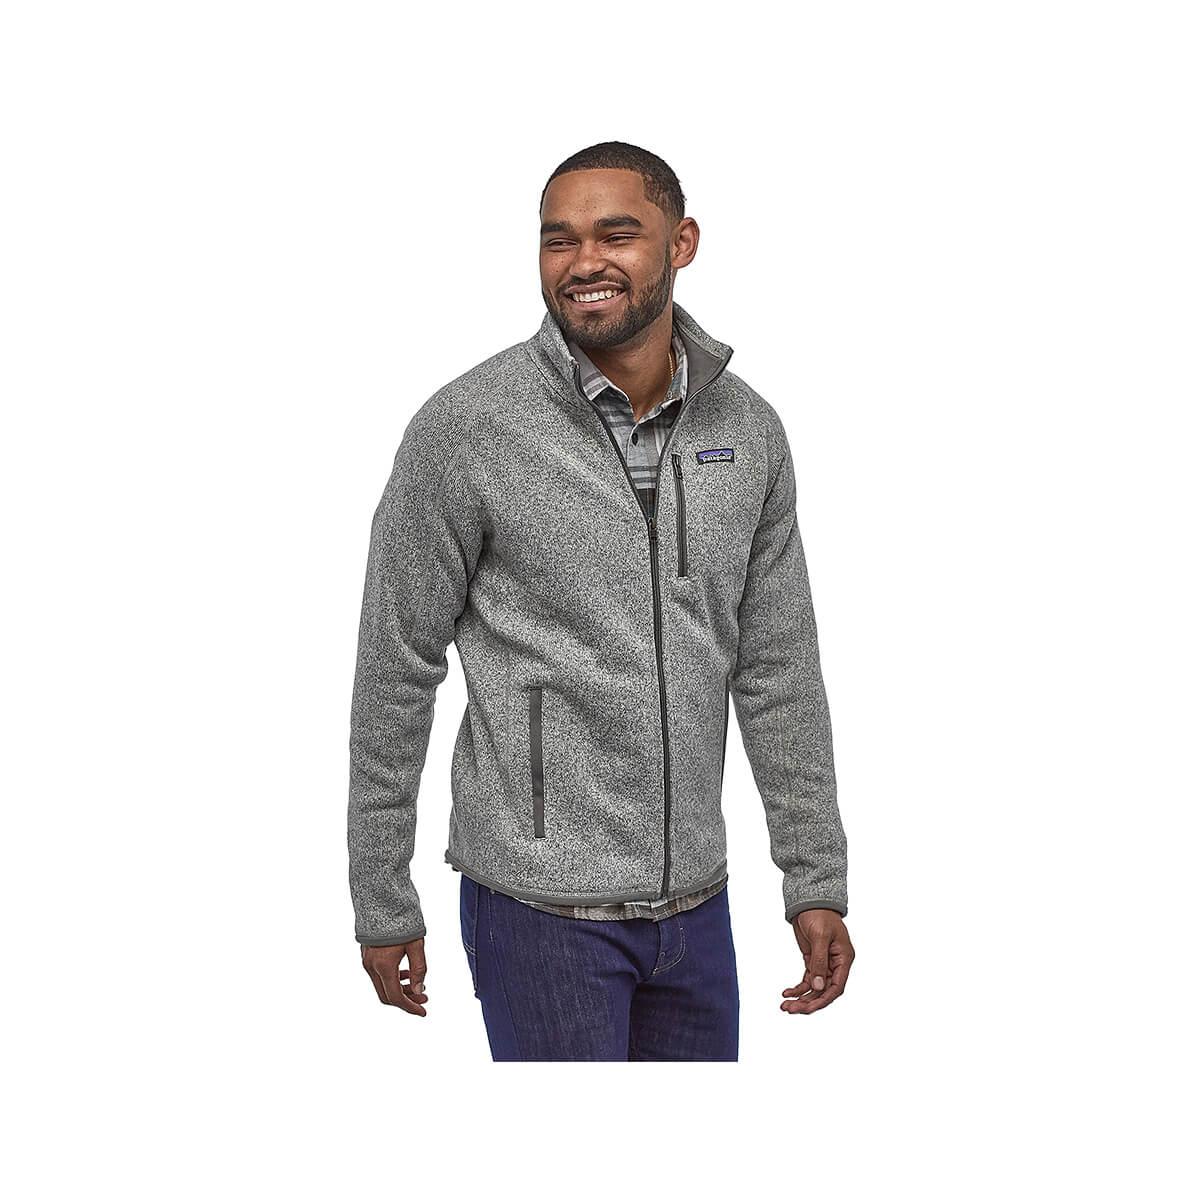  Men's Better Sweater Fleece Jacket